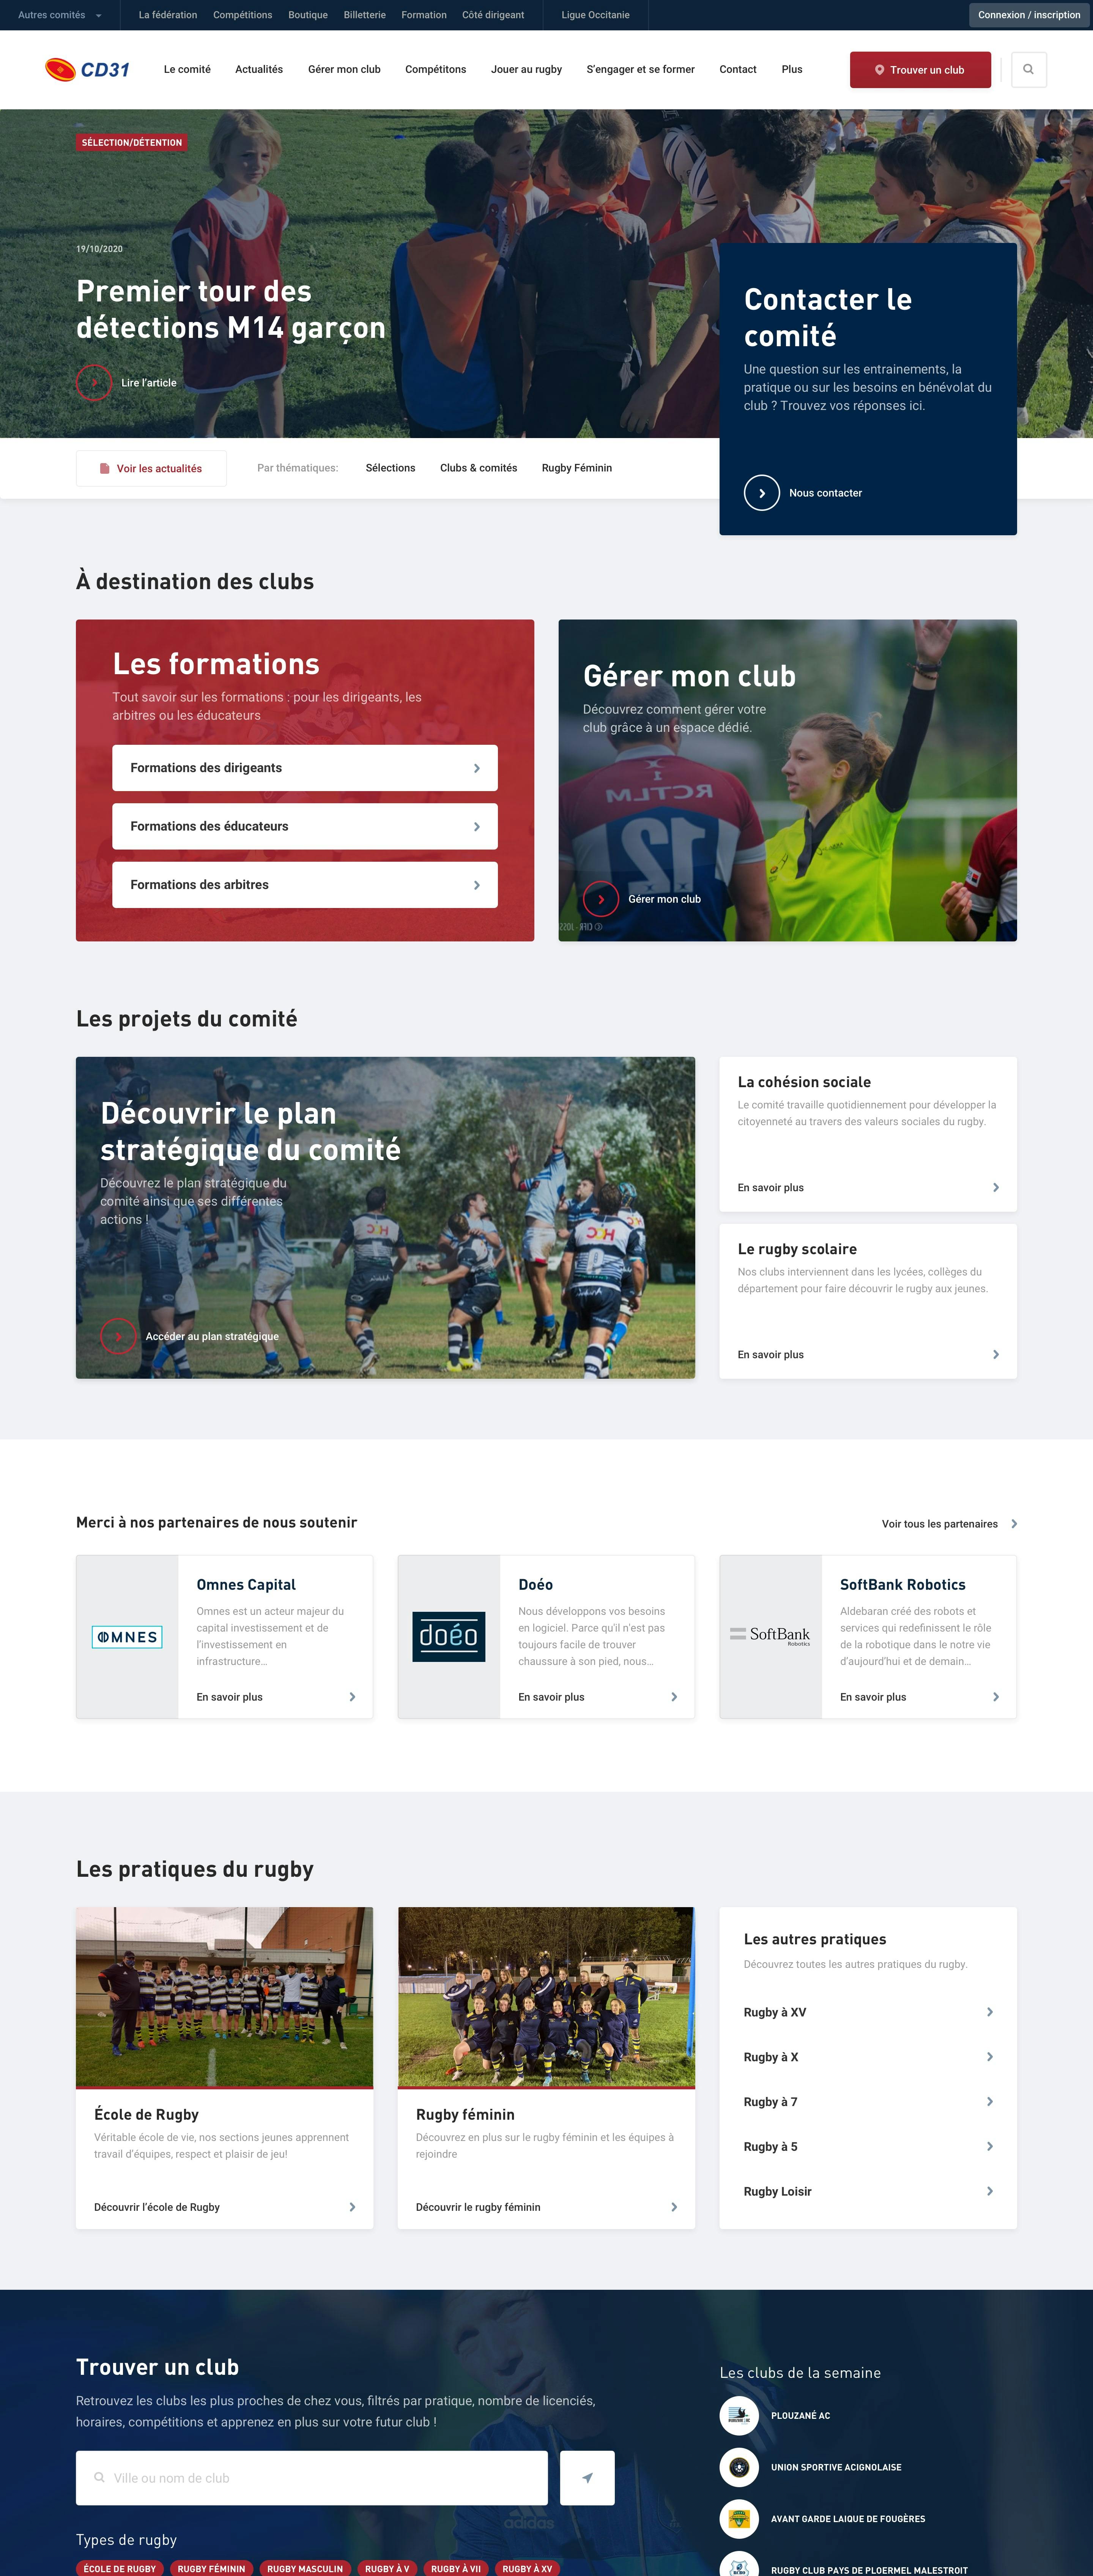 Design of websites for departmental committees